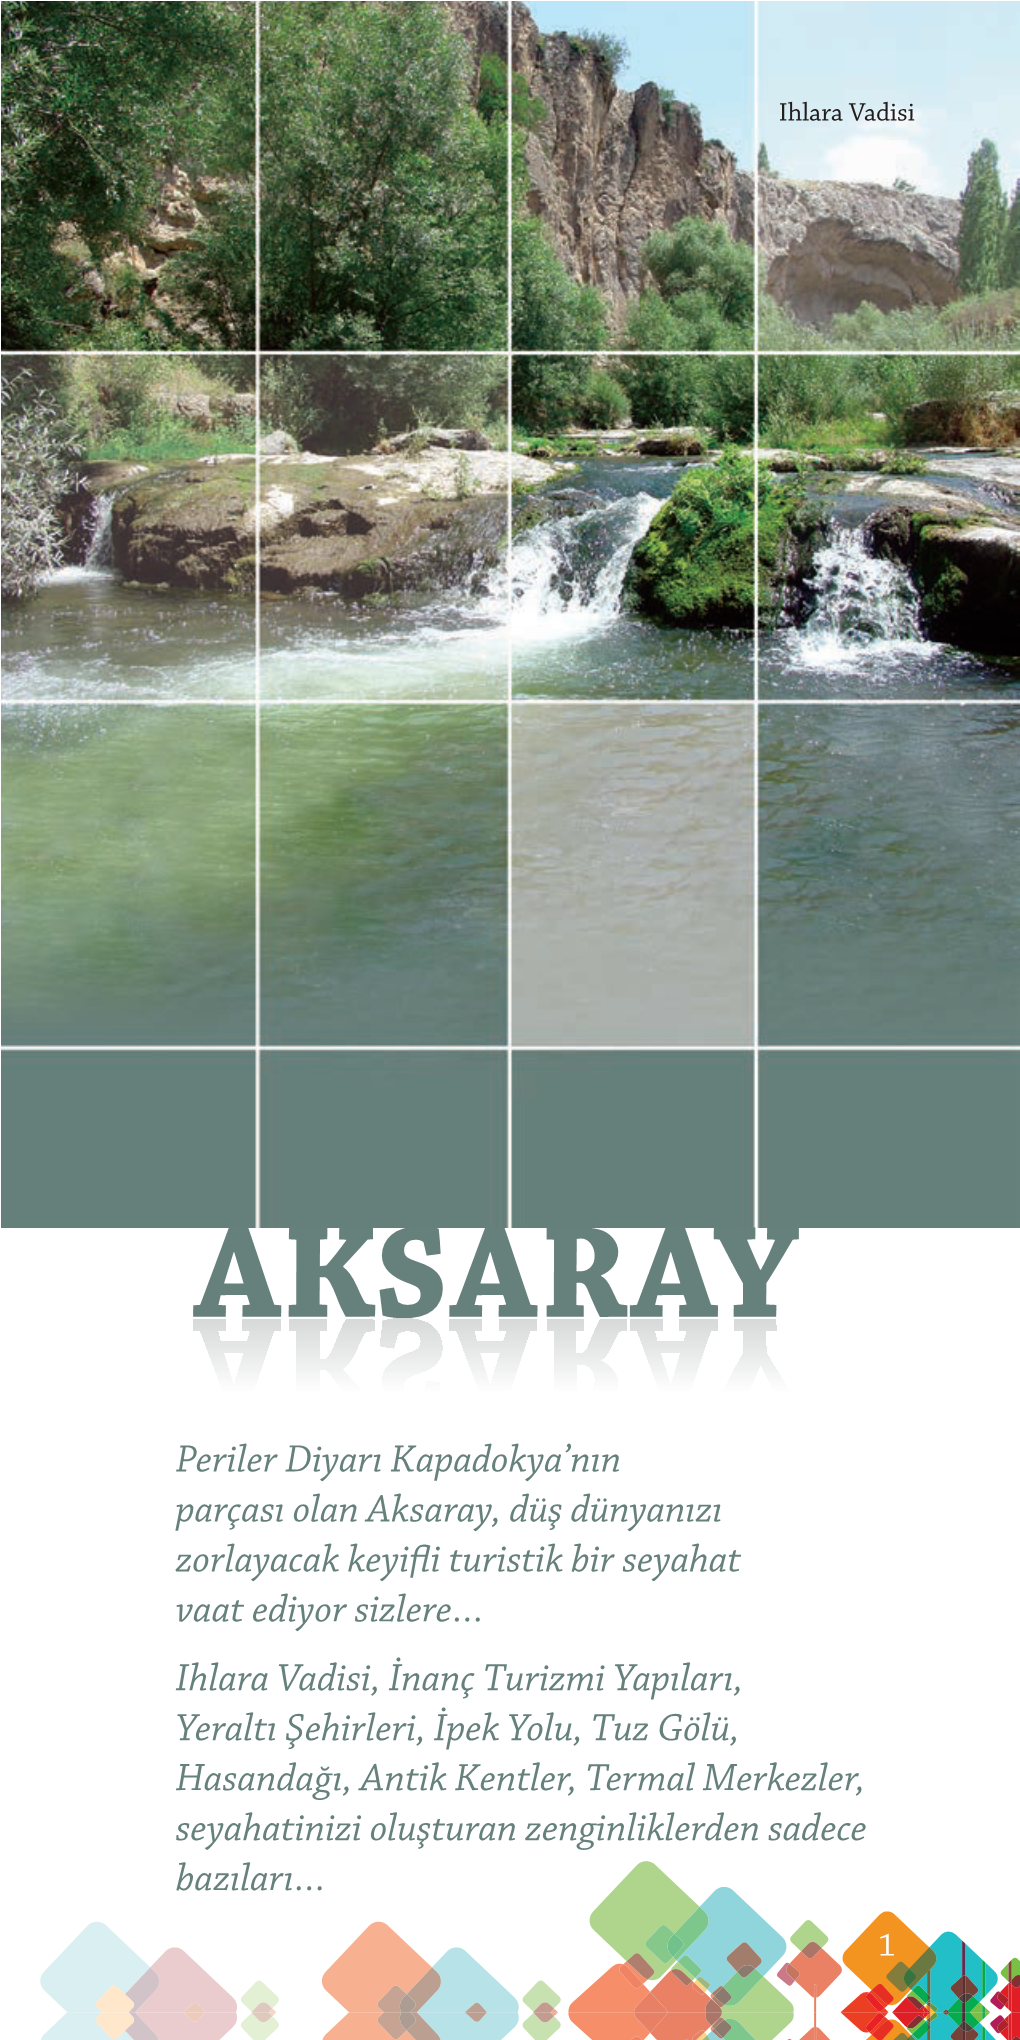 AKSARAY Turkce TR.Indd